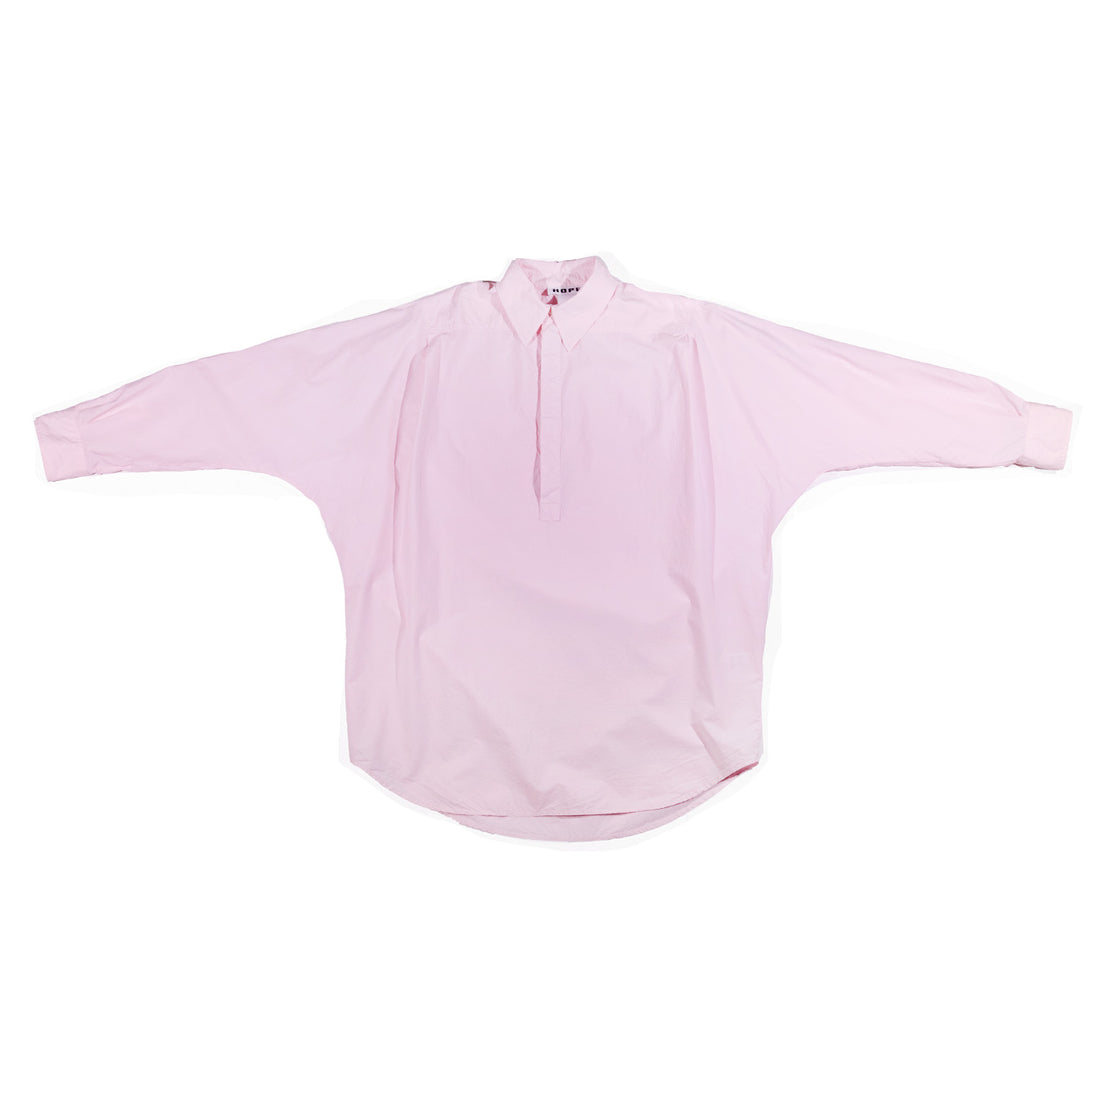 Hope Unit Shirt in LT Pink